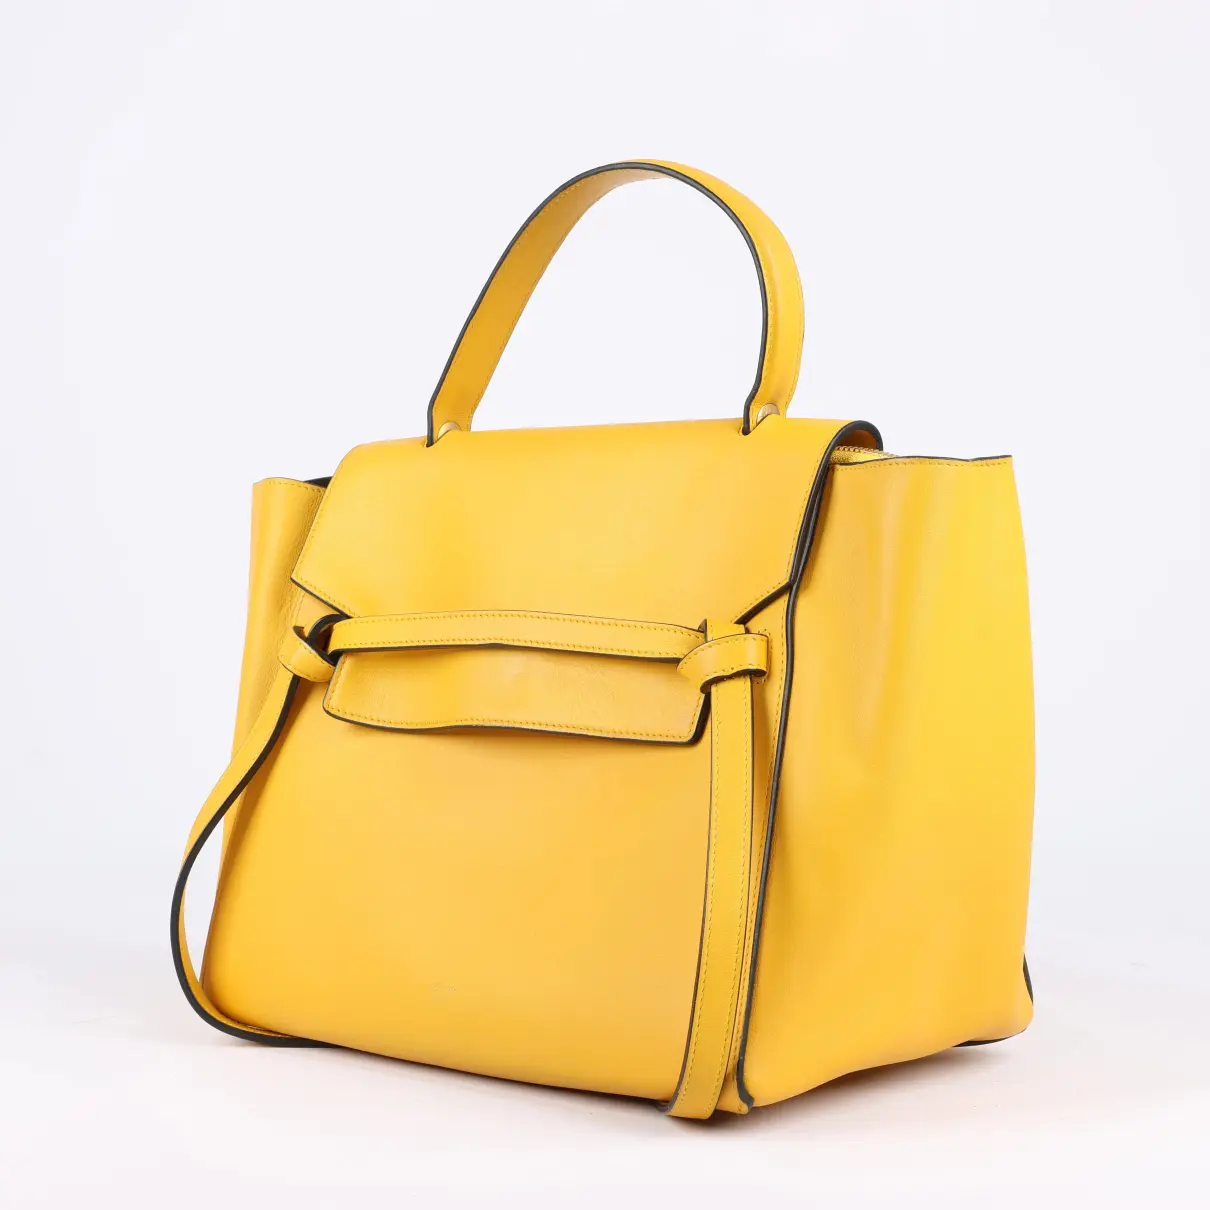 Buy Celine Leather mini bag online